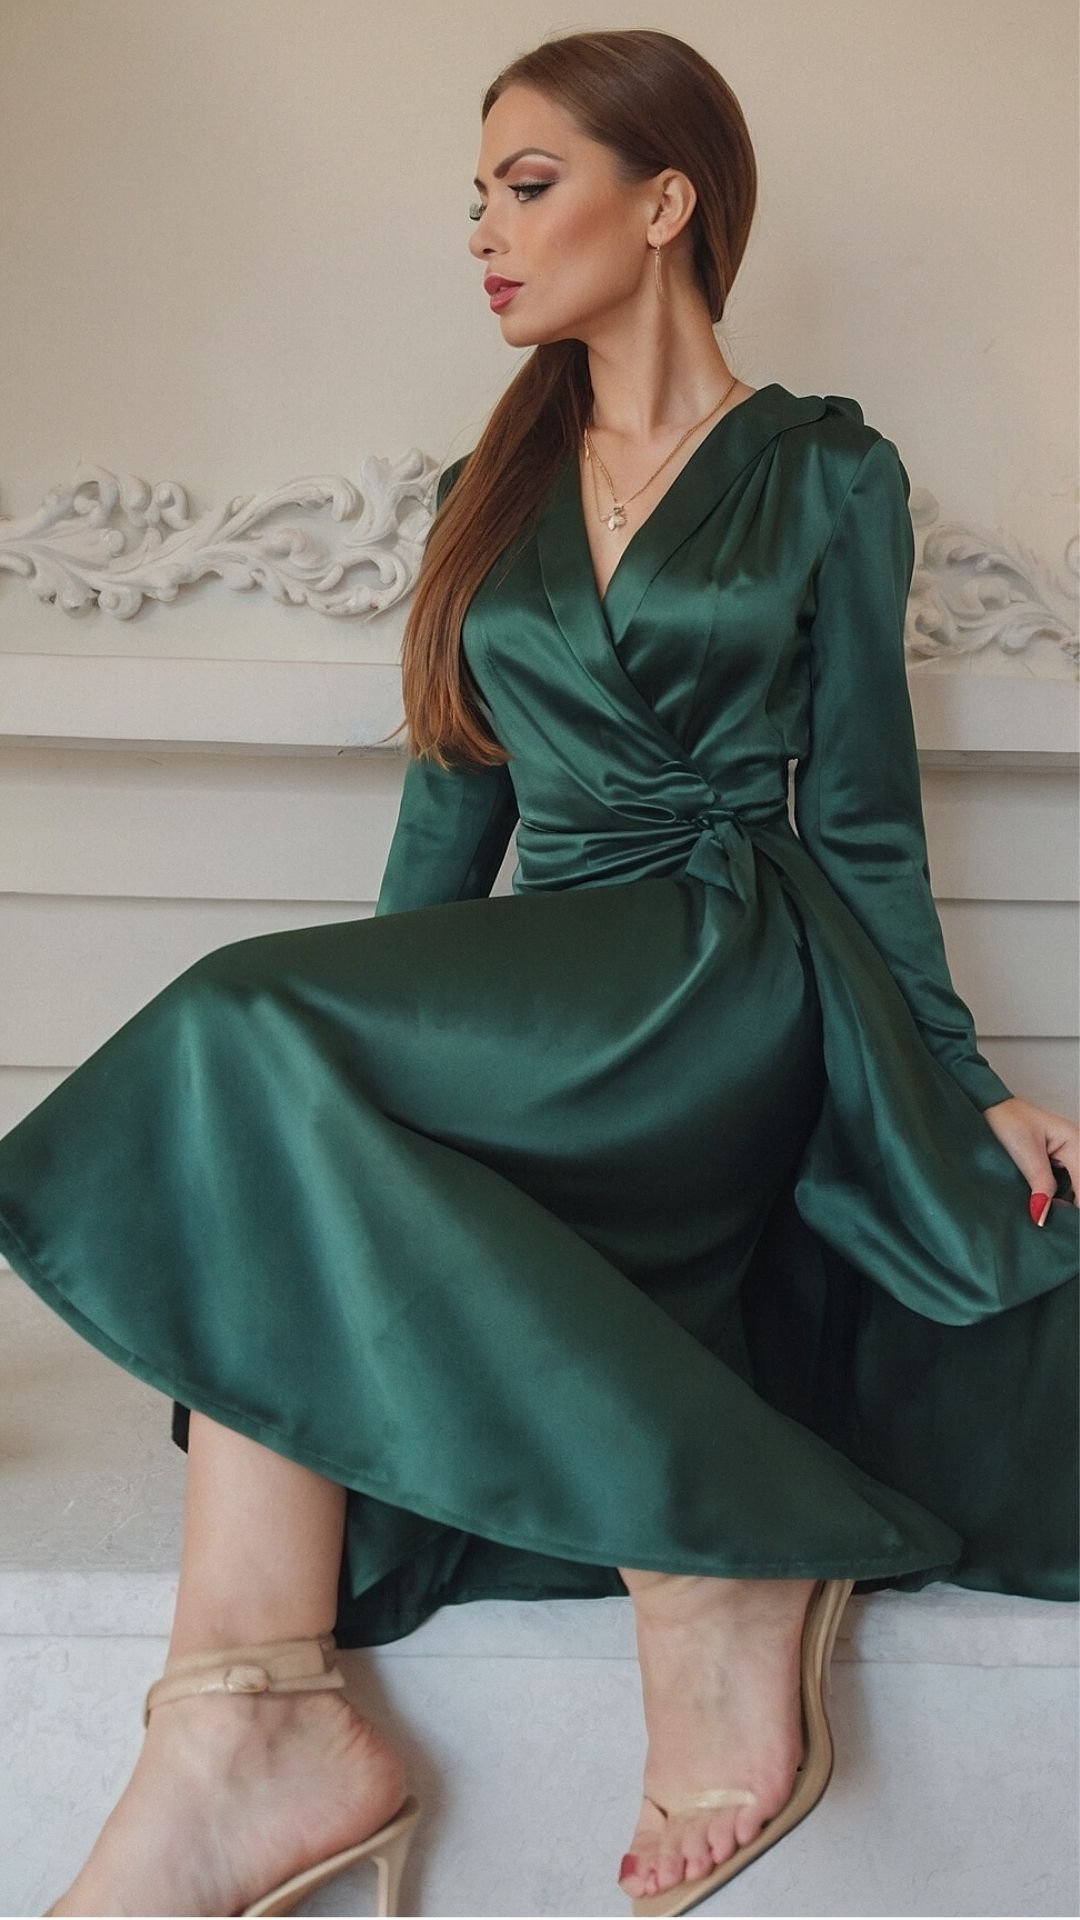 Velvet Vogue: Emerald Elegance in Luxe Drapery